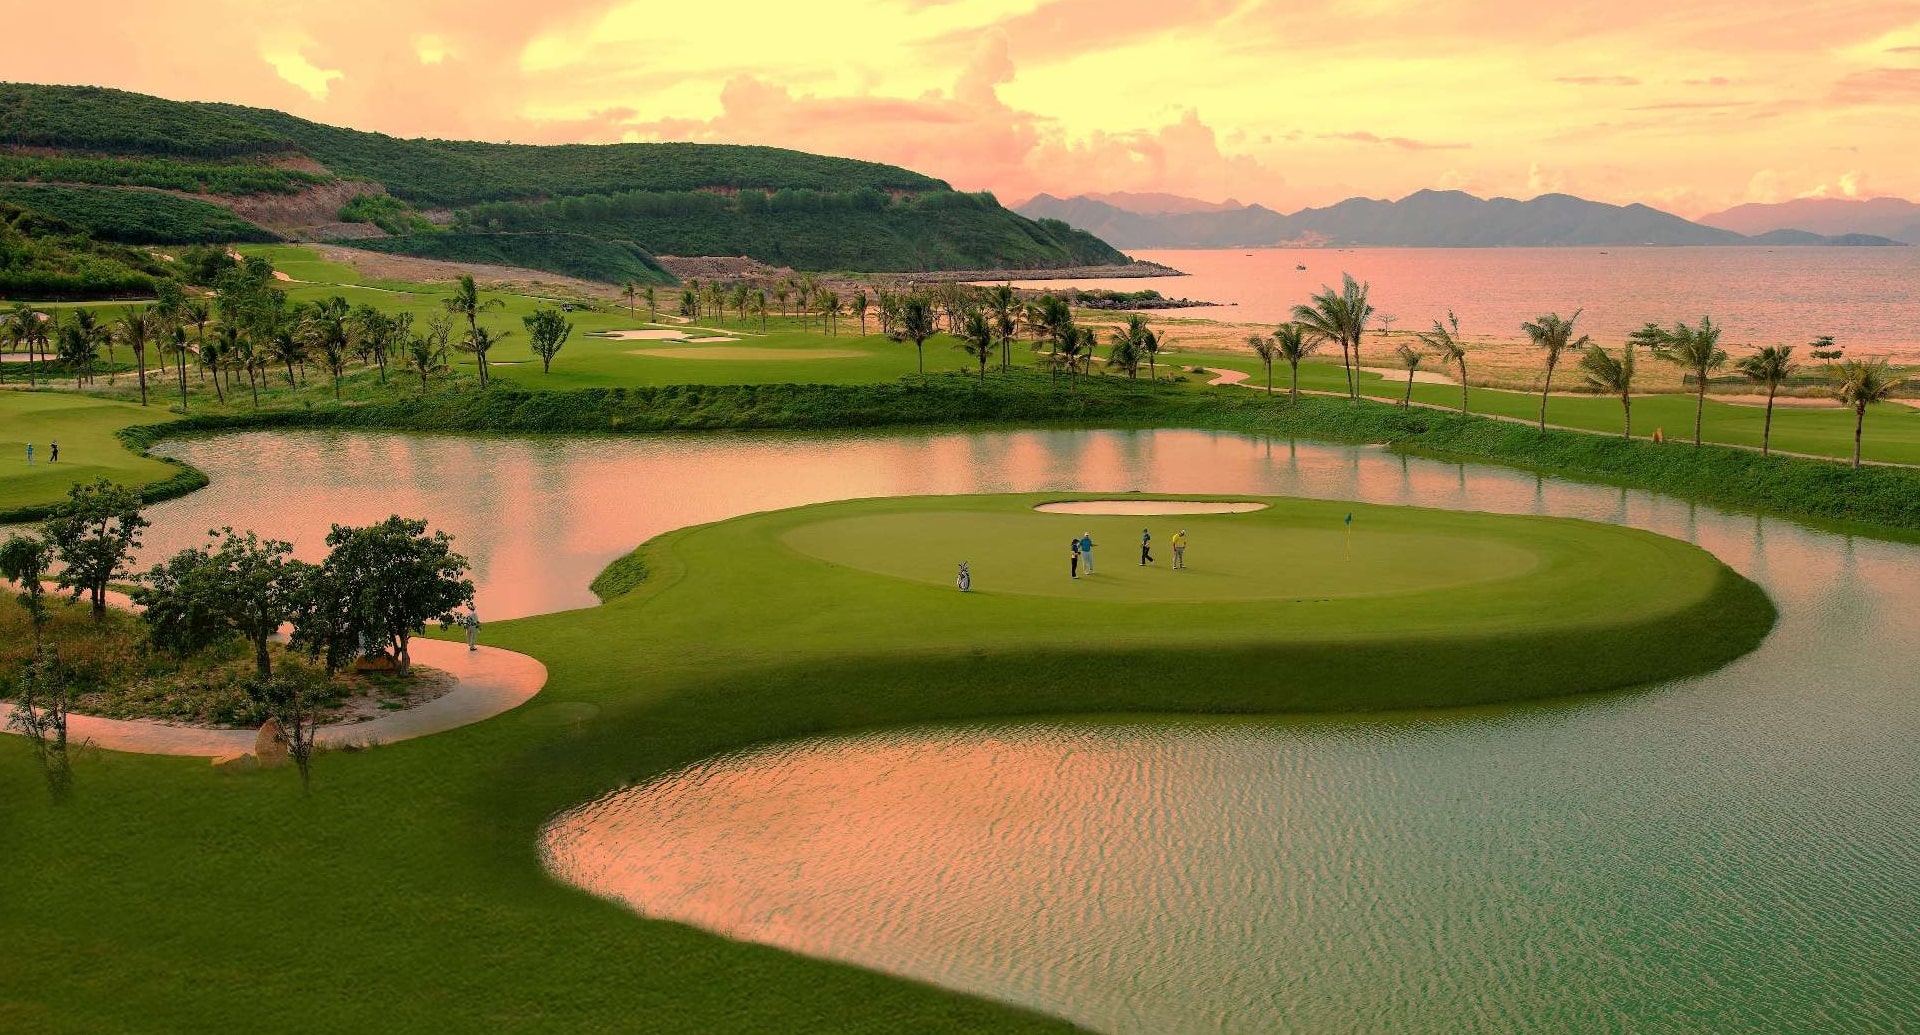 sân golf Nha Trang